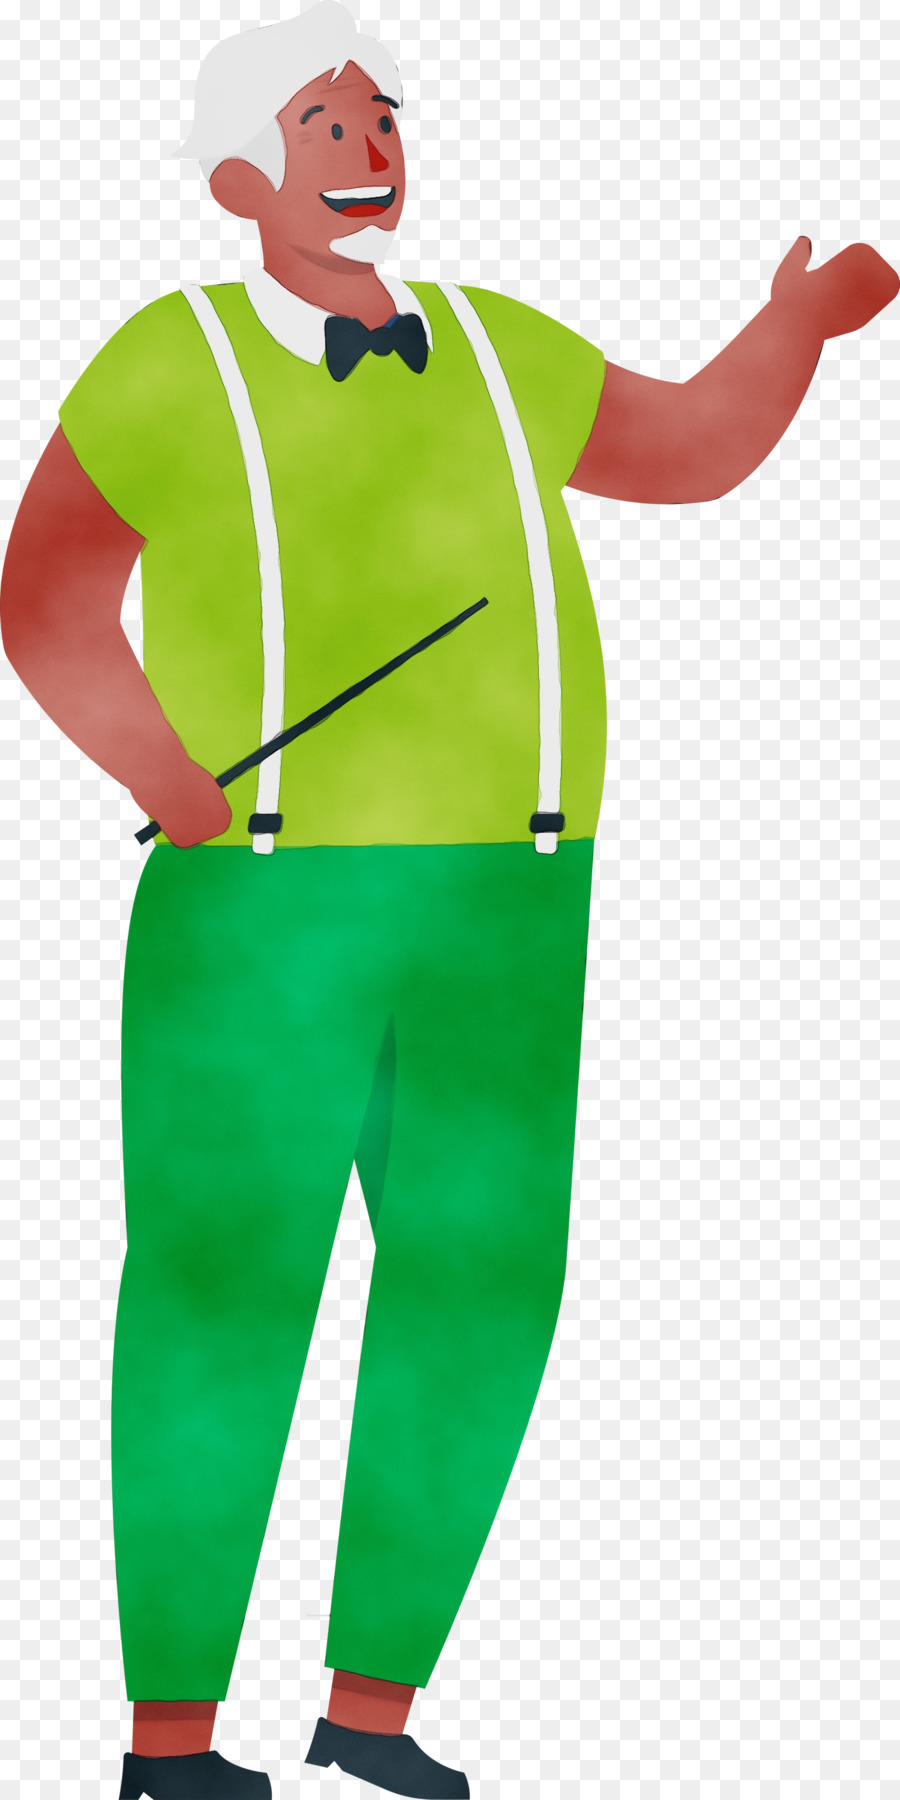 Kostüm grüner Clown Charakter Kopfbedeckung - 